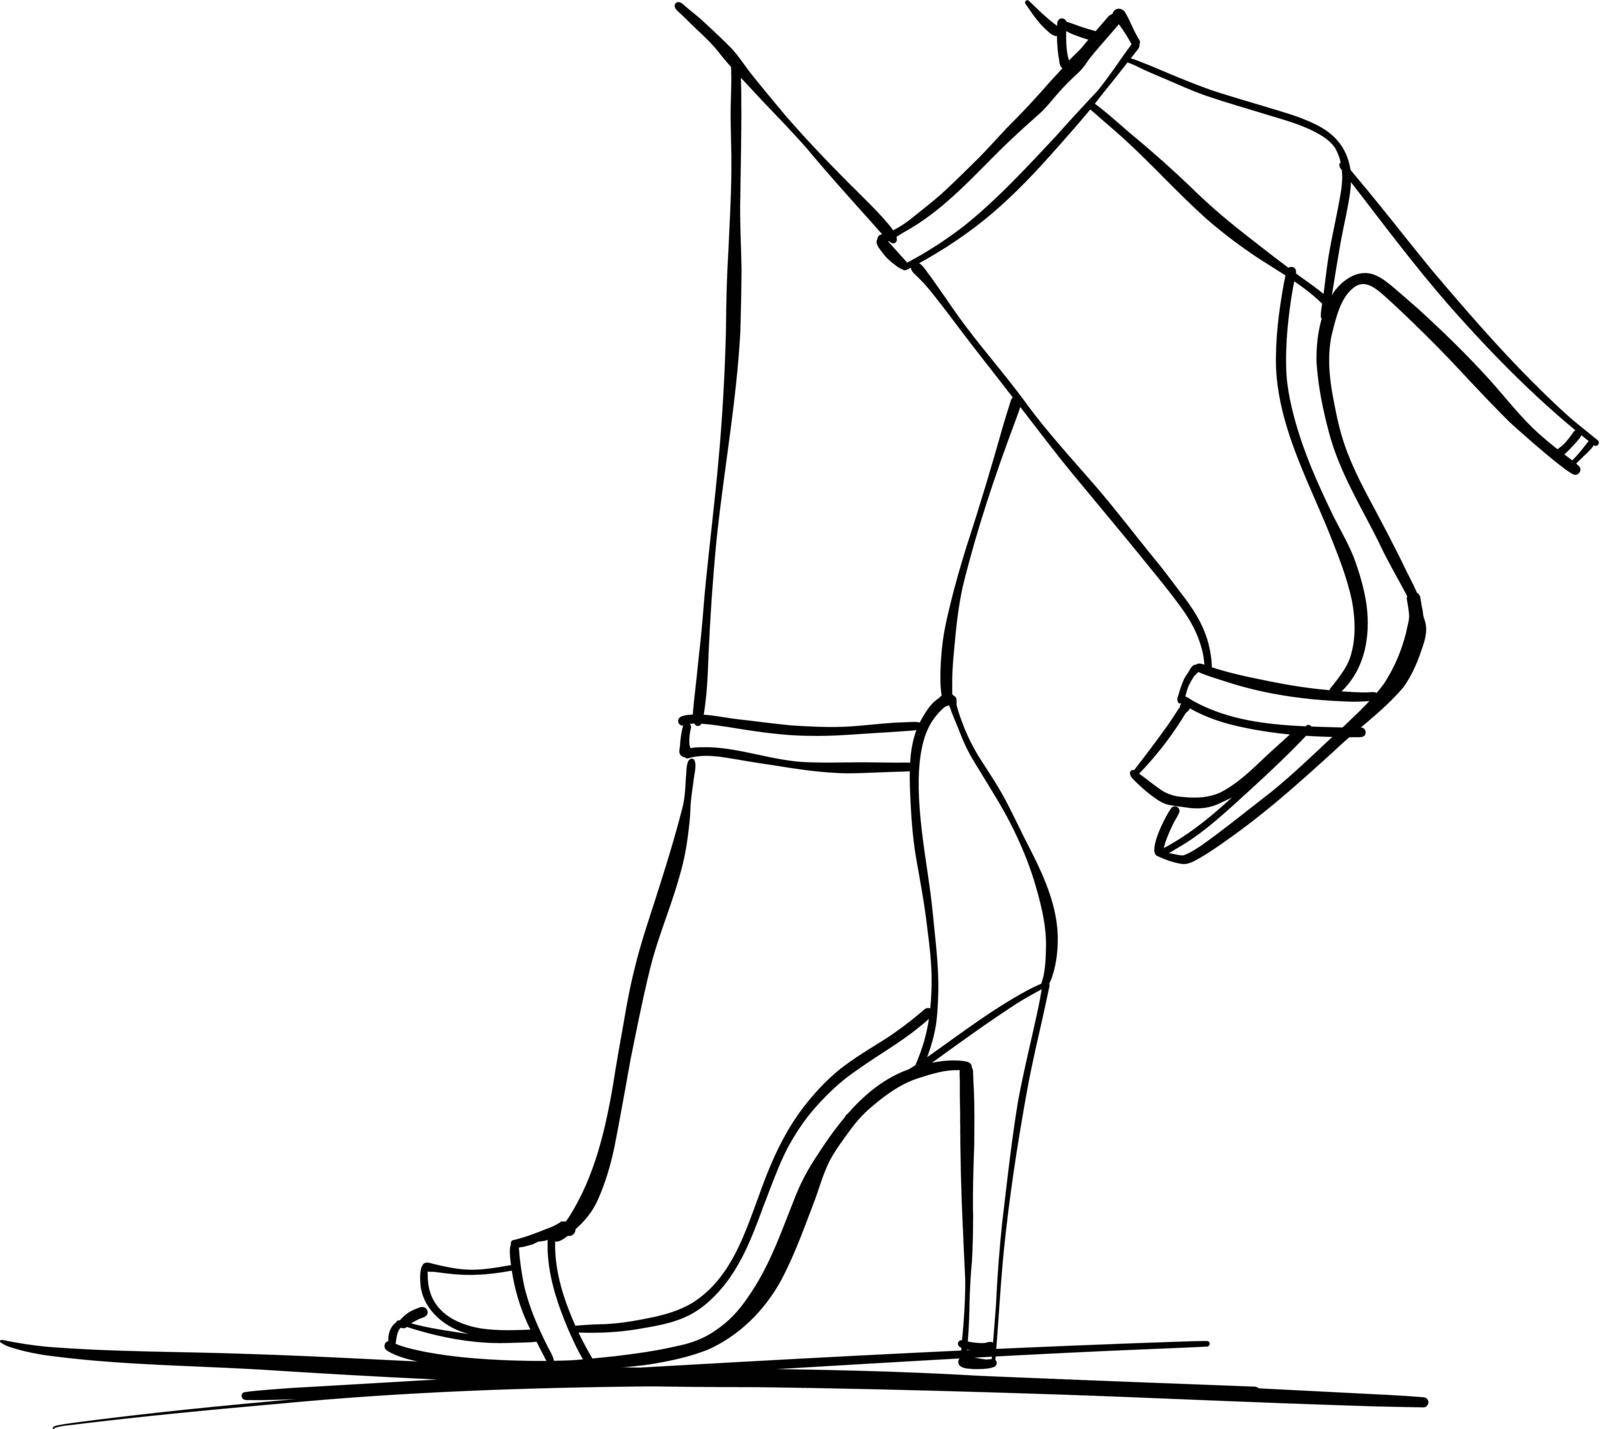 Woman High Heel Shoe by aroas